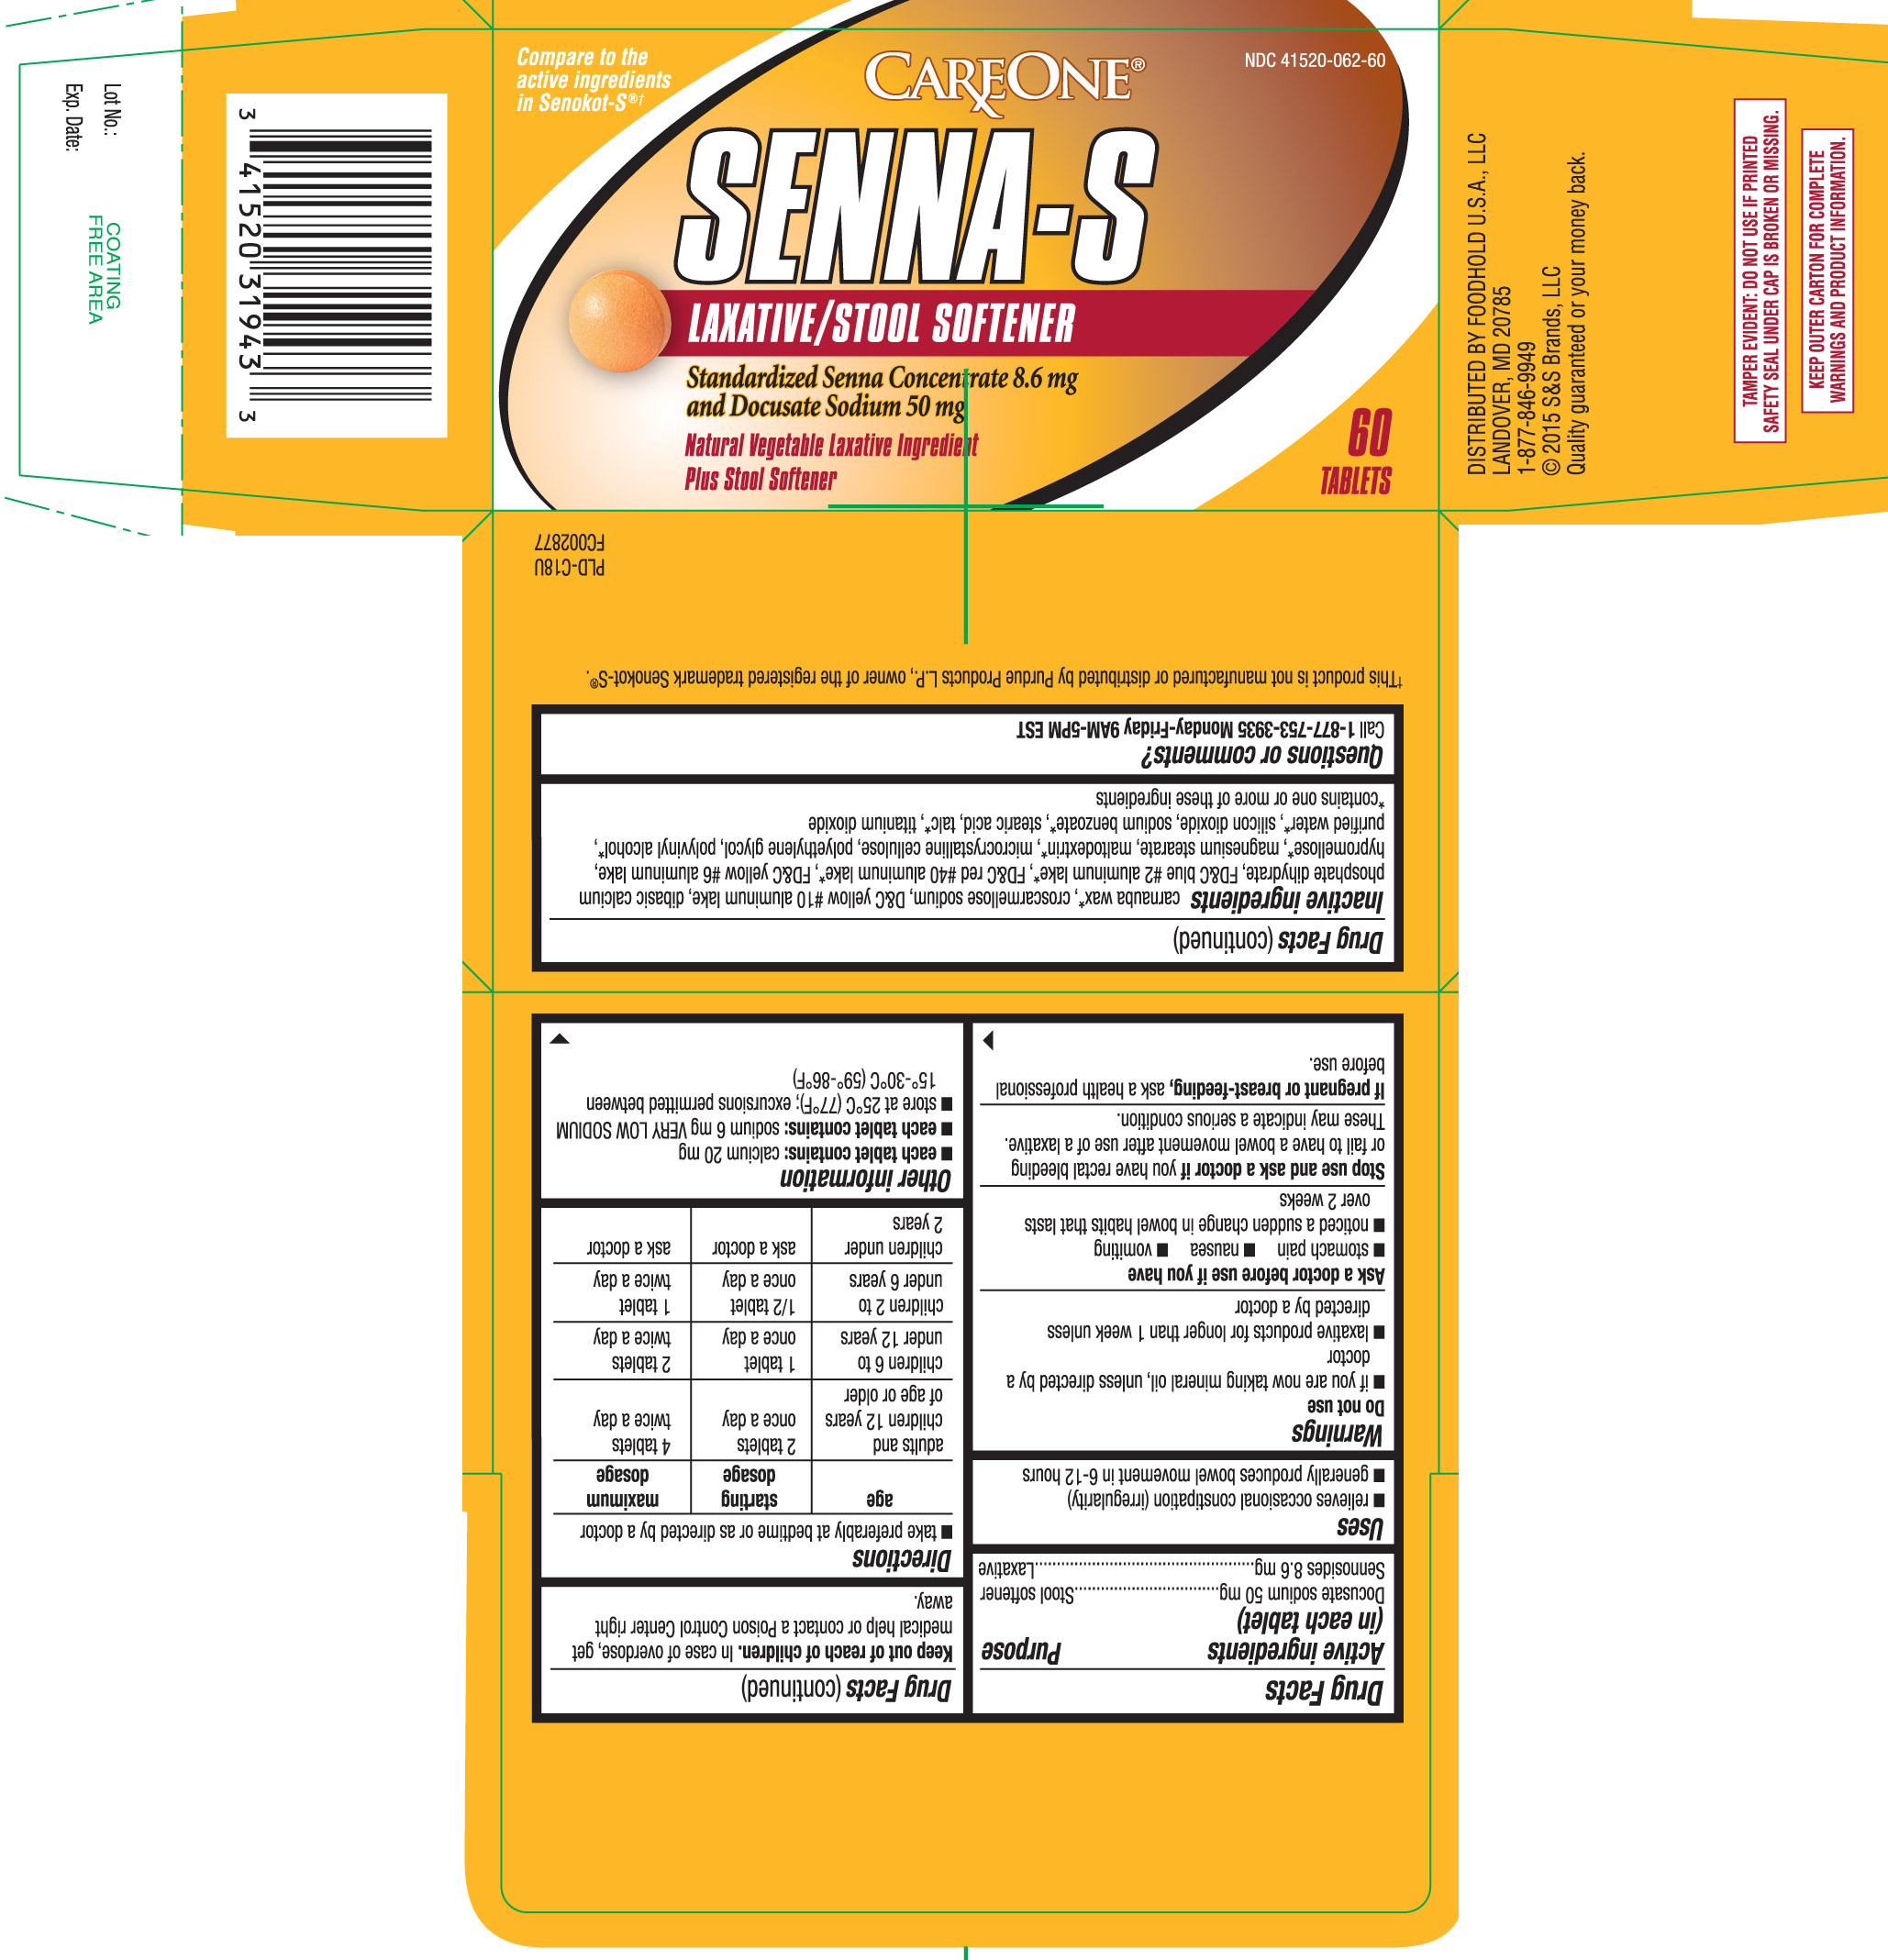 Docusate sodium 50 mg, Sennoside 8.6 mg